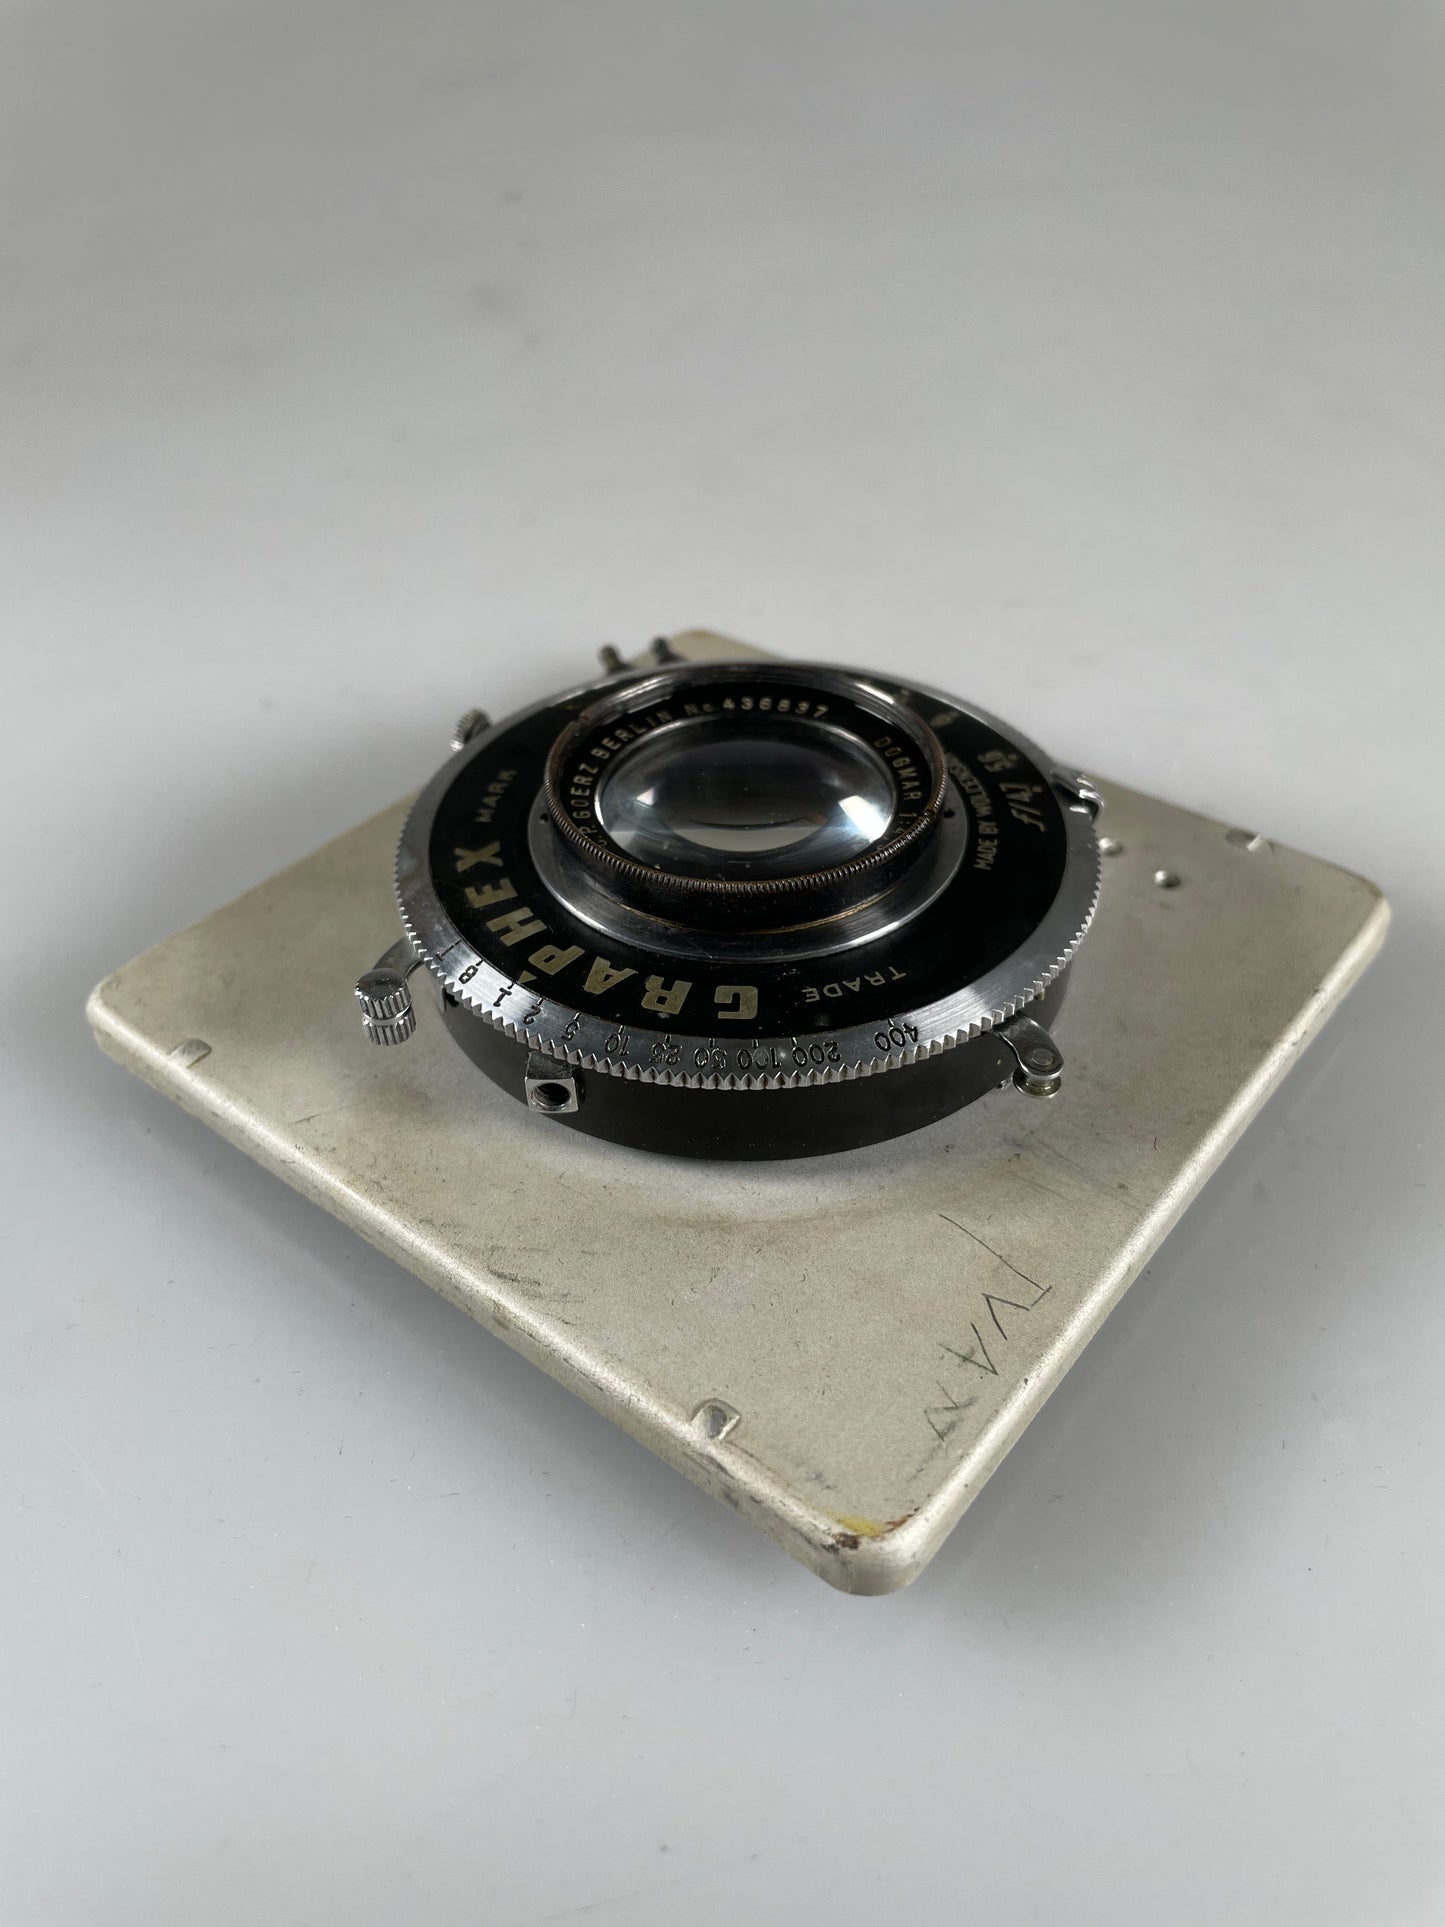 Goerz 12.5cm 125mm f4.5 Dogmar Lens with graphs shutter/graflex board